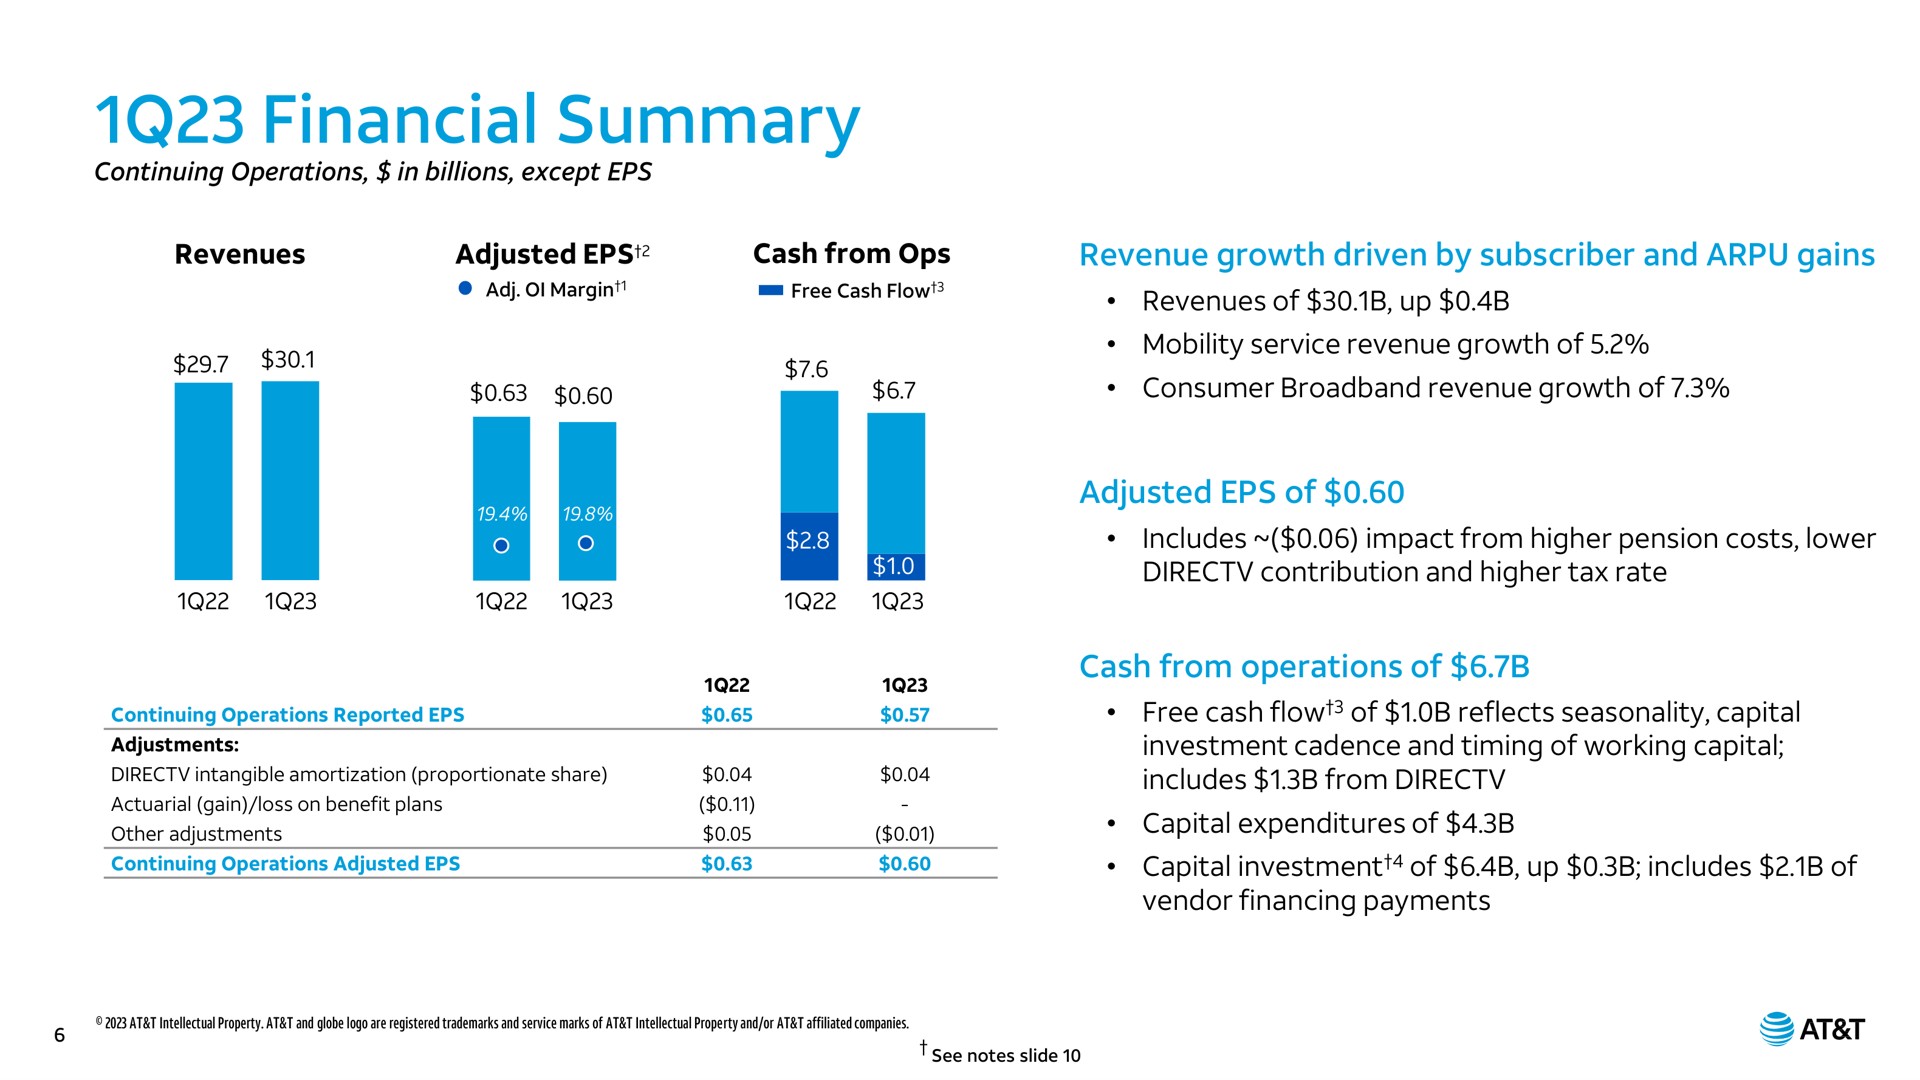 financial summary | AT&T